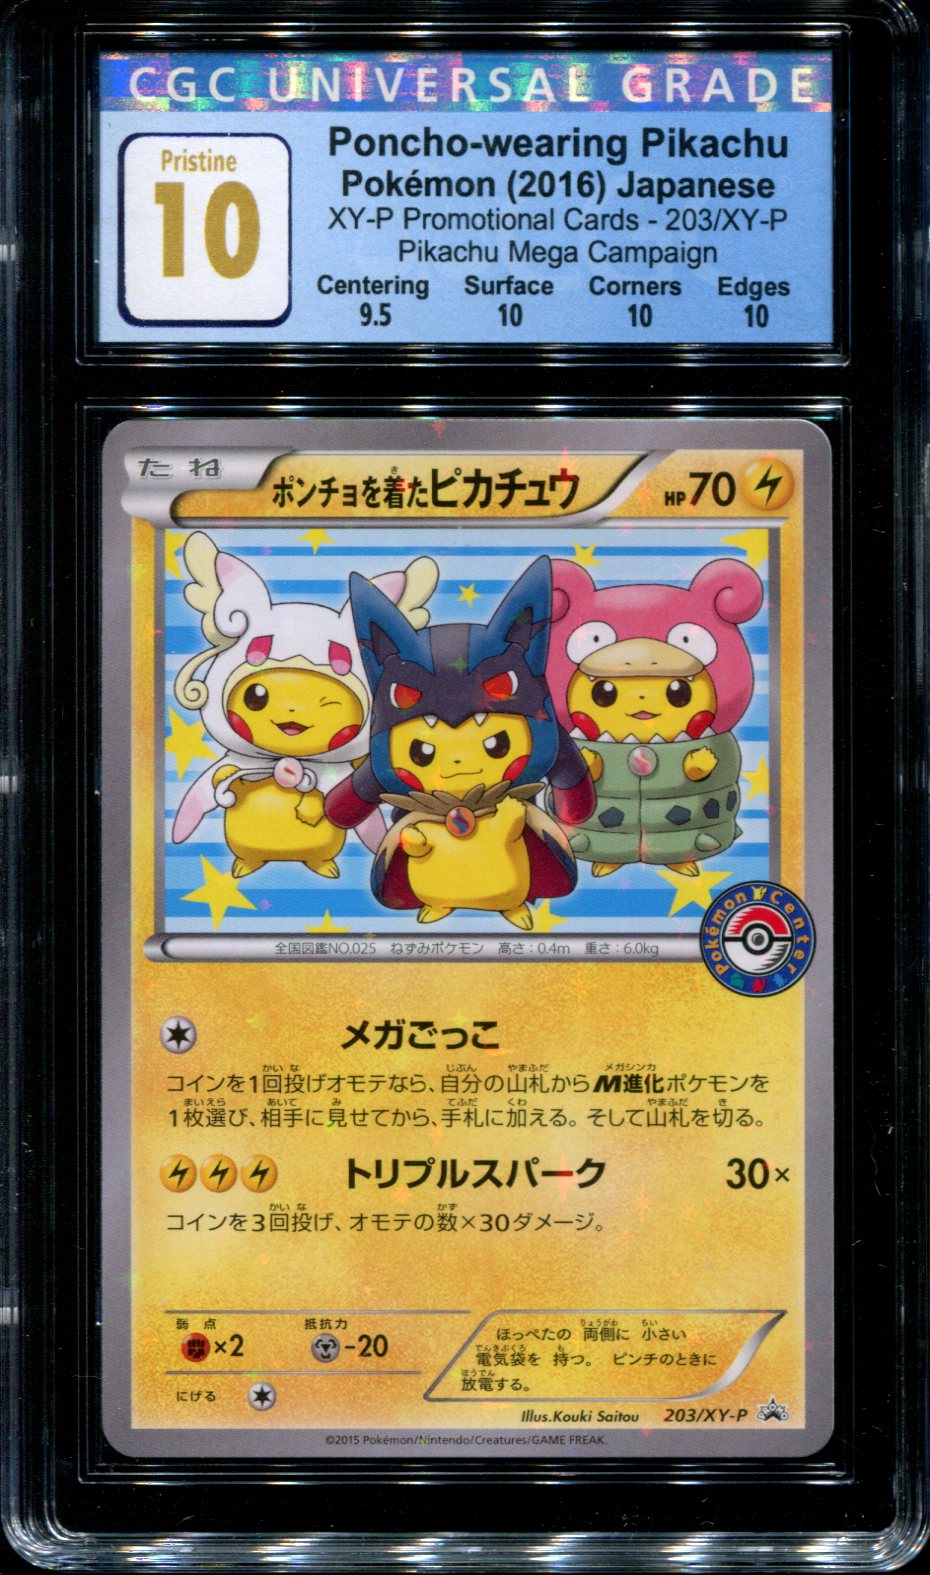 Poncho-wearing Pikachu - Japanese - 203/XY-P - CGC 10 Pristine - Pikachu  Mega Campaign Promo - 65121